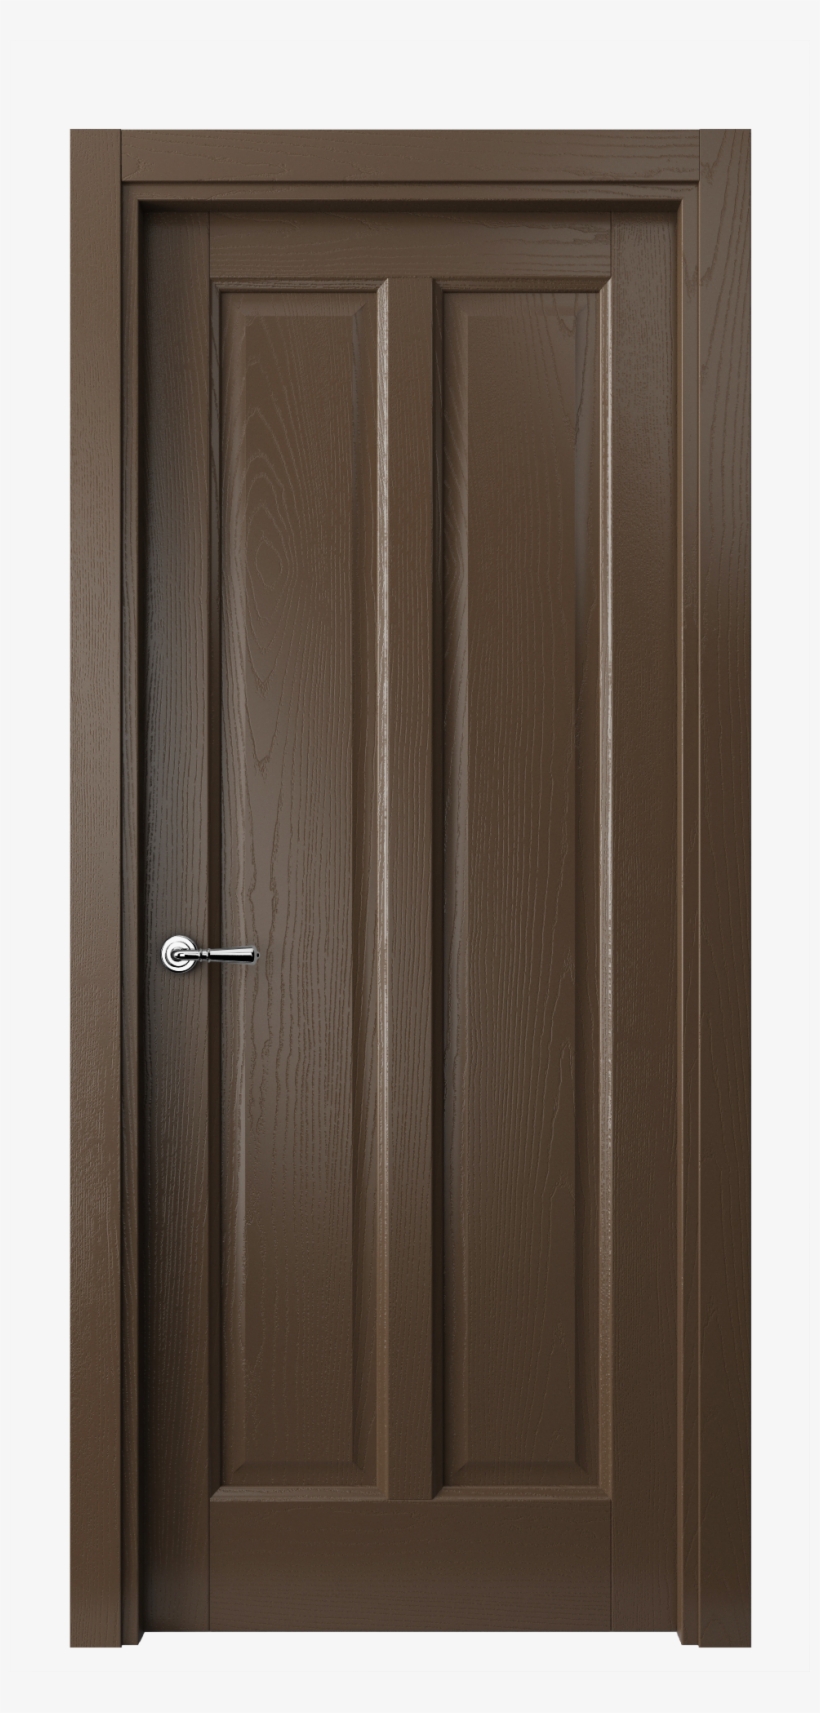 SARTODOORS Double Pocket Sliding Brown Doors 48 x 84 with Strips | Planum  0020 Chocolate Ash